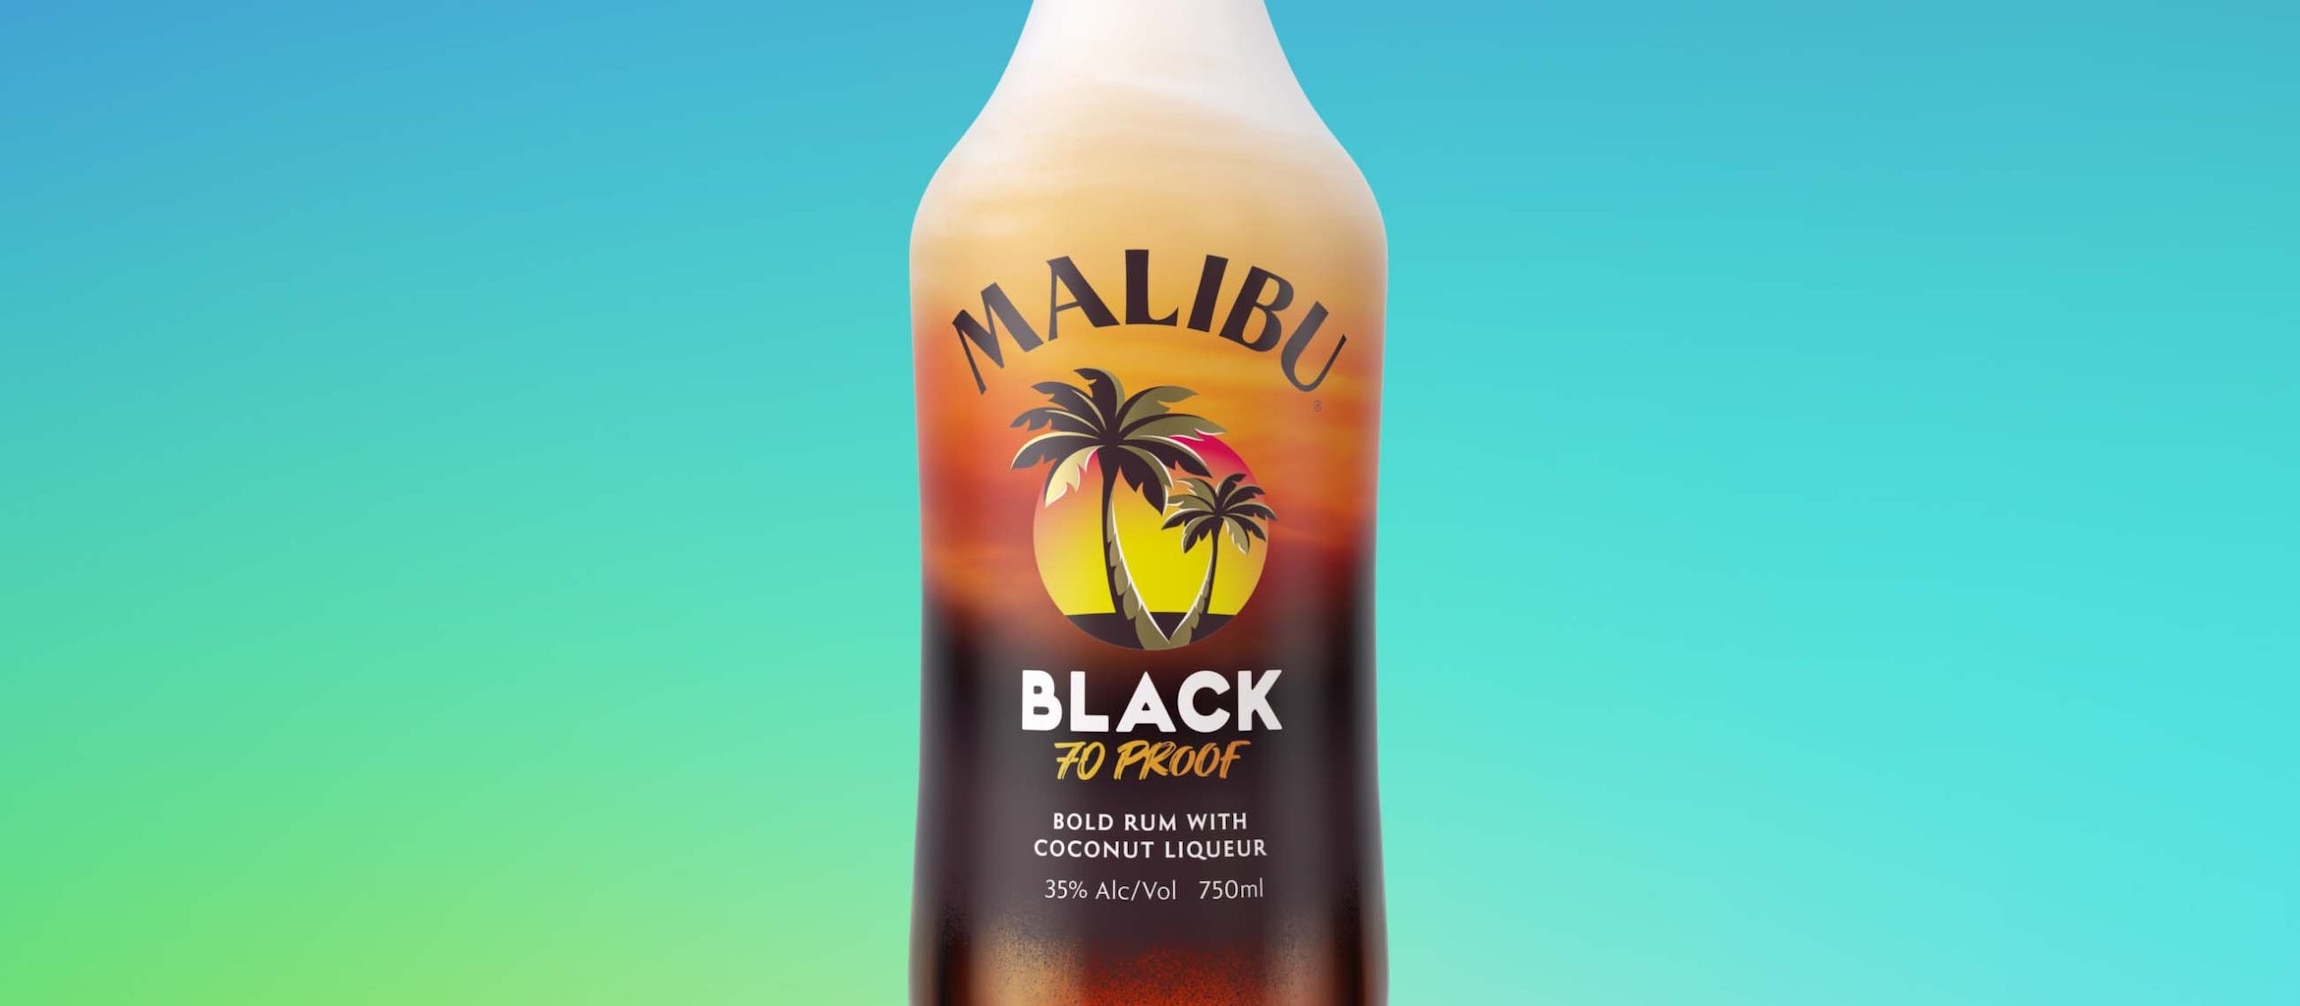 Malibu black bottle